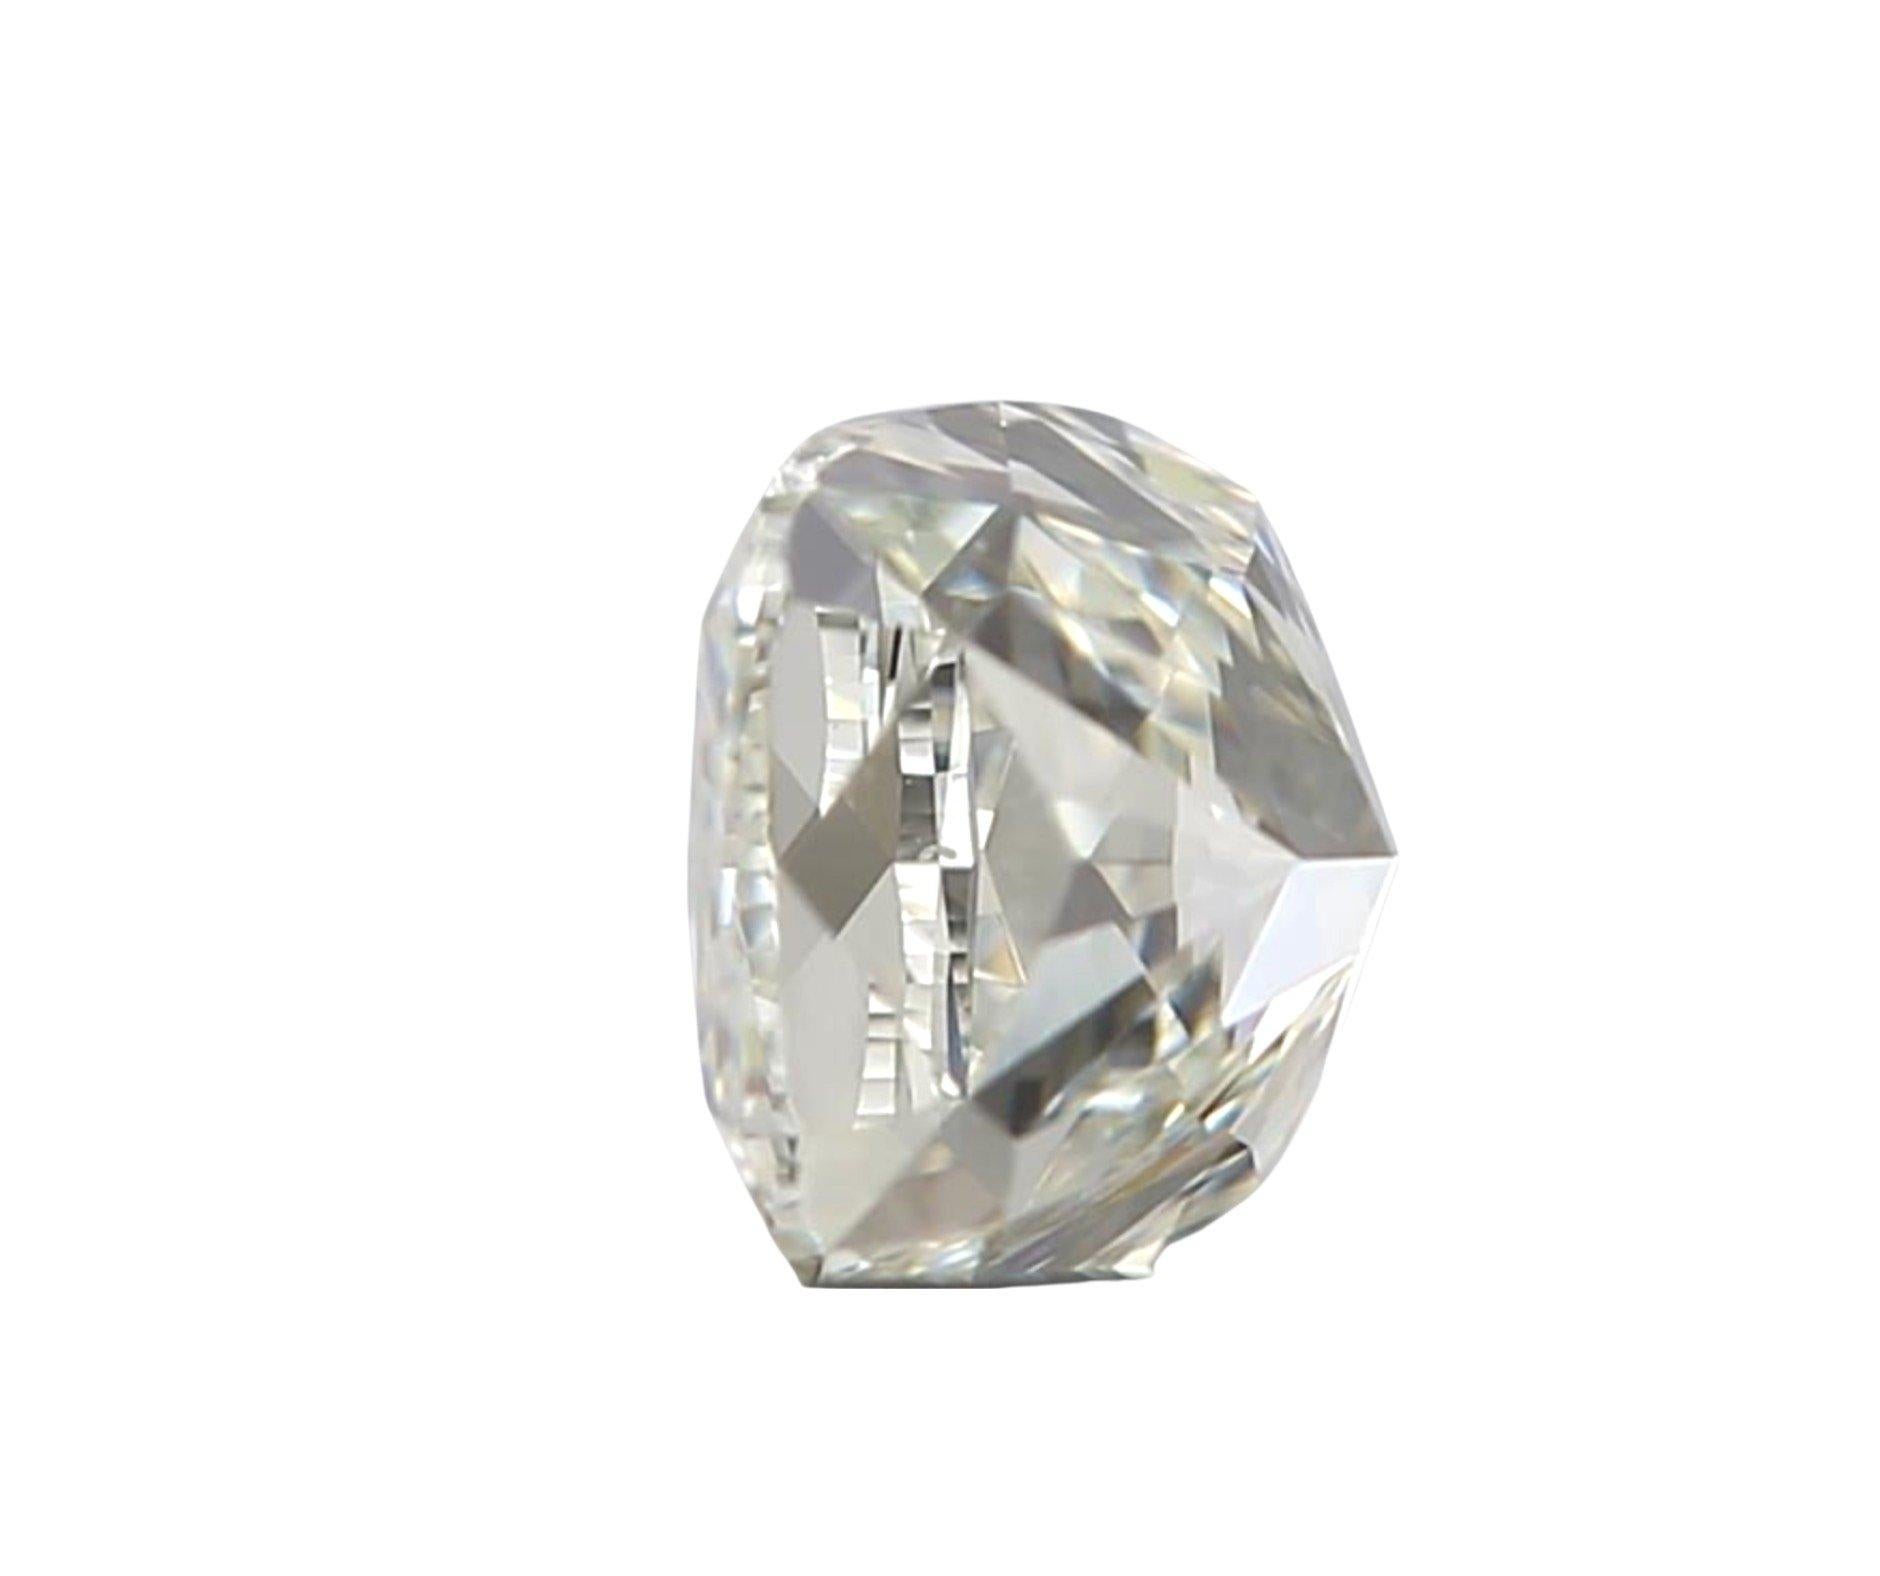 Cushion Cut 1 pc Natural Diamond - 0.71 ct - Cushion - J - VS1- GIA Certificate For Sale